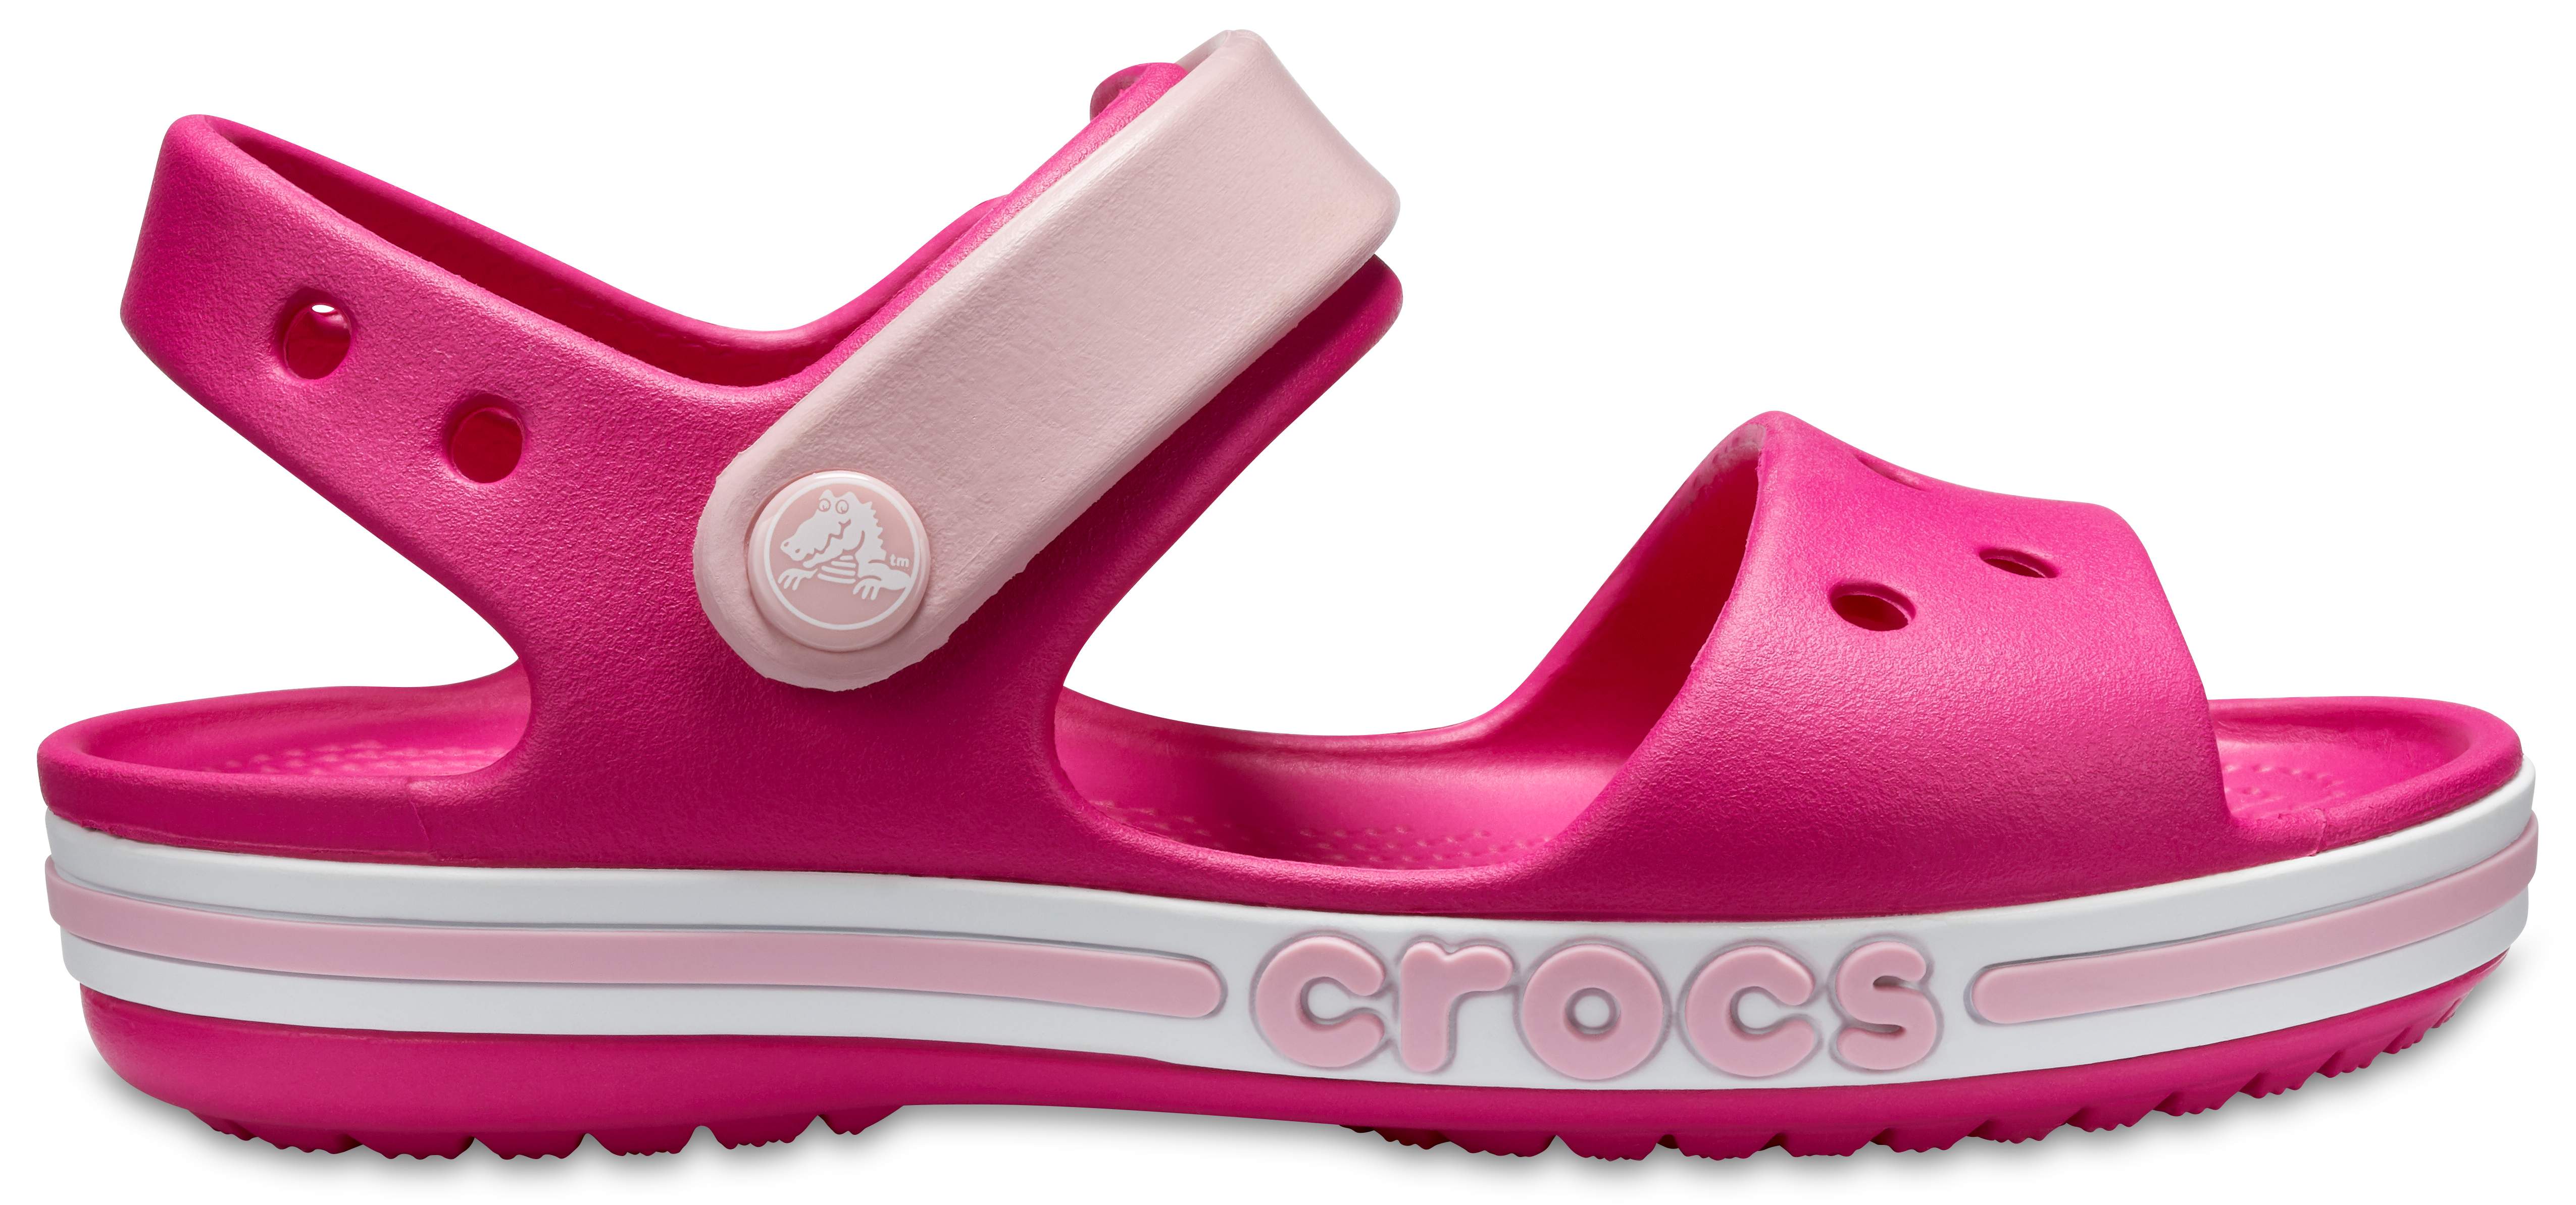 boys croc sandals